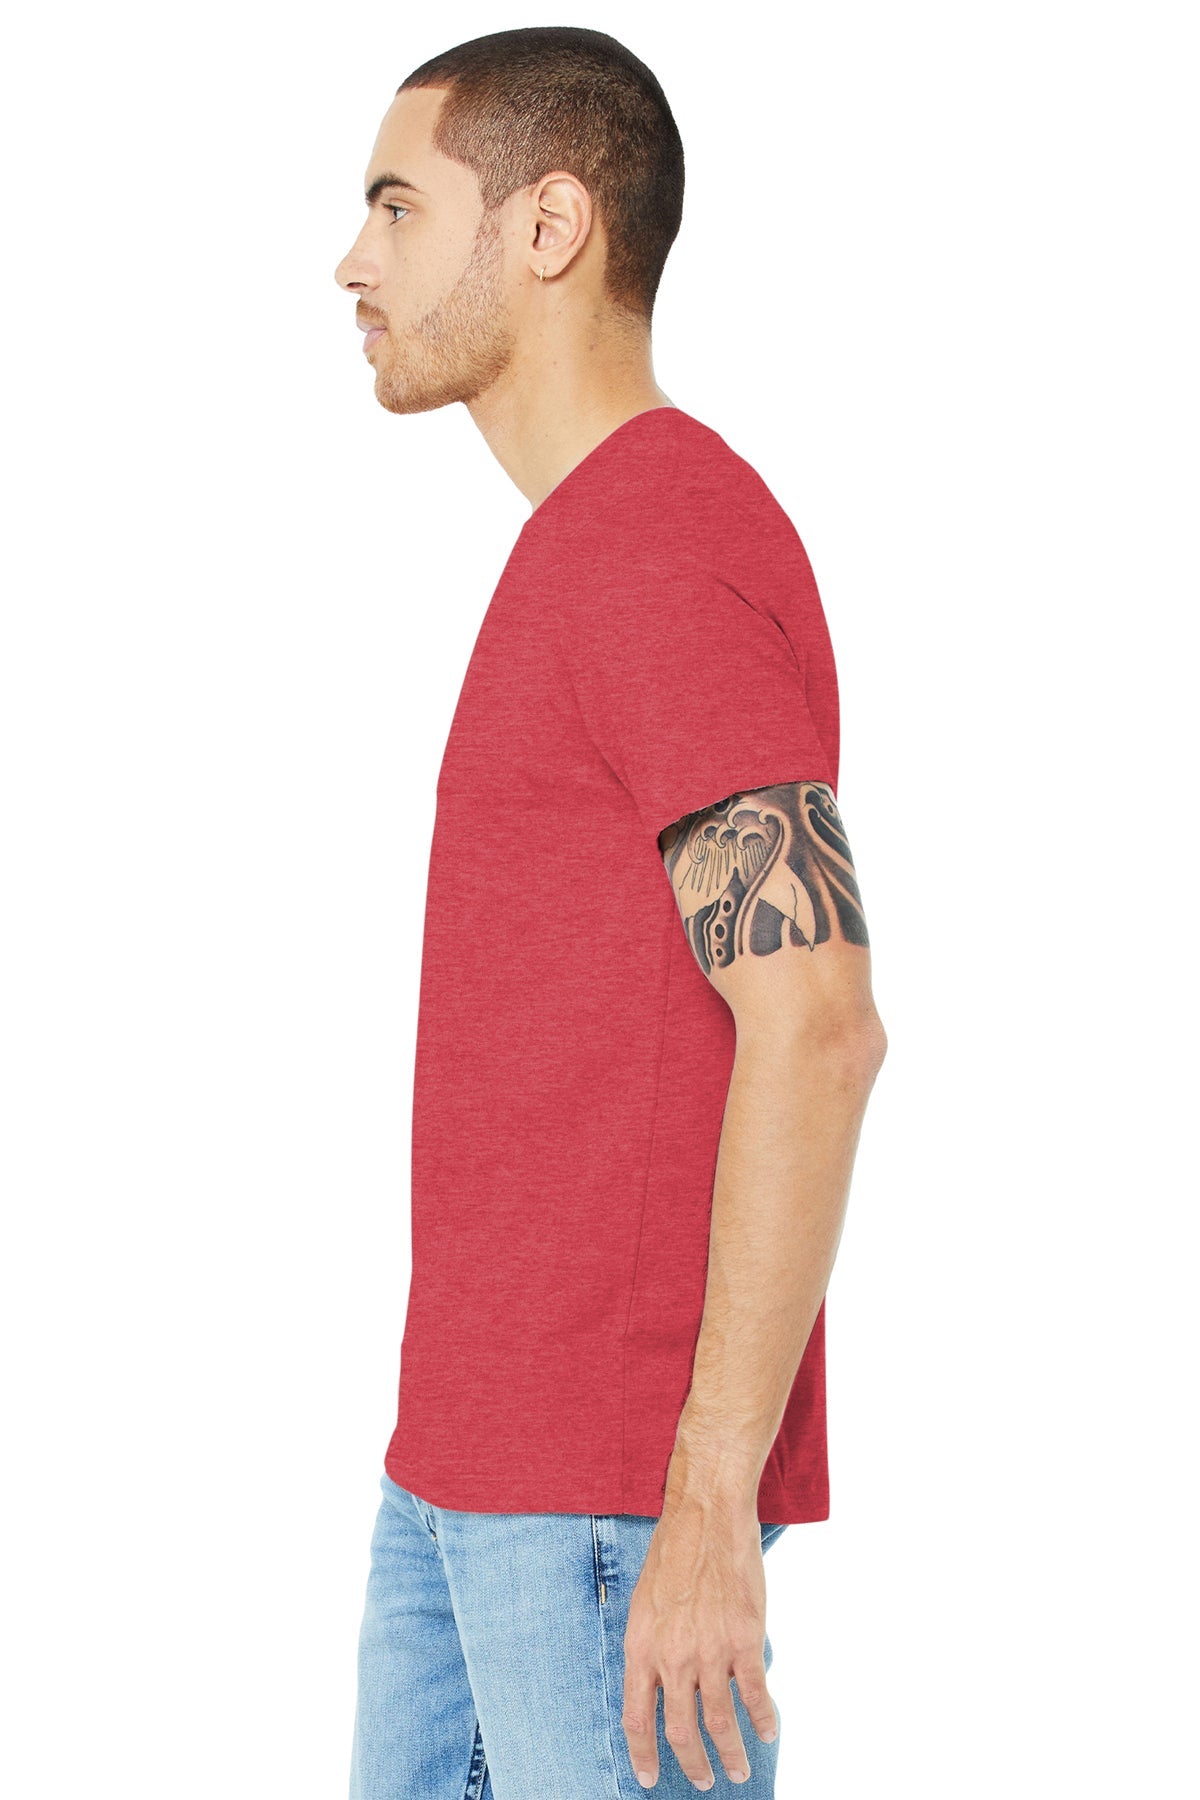 bella + canvas unisex jersey short sleeve t-shirt 3001c heather red